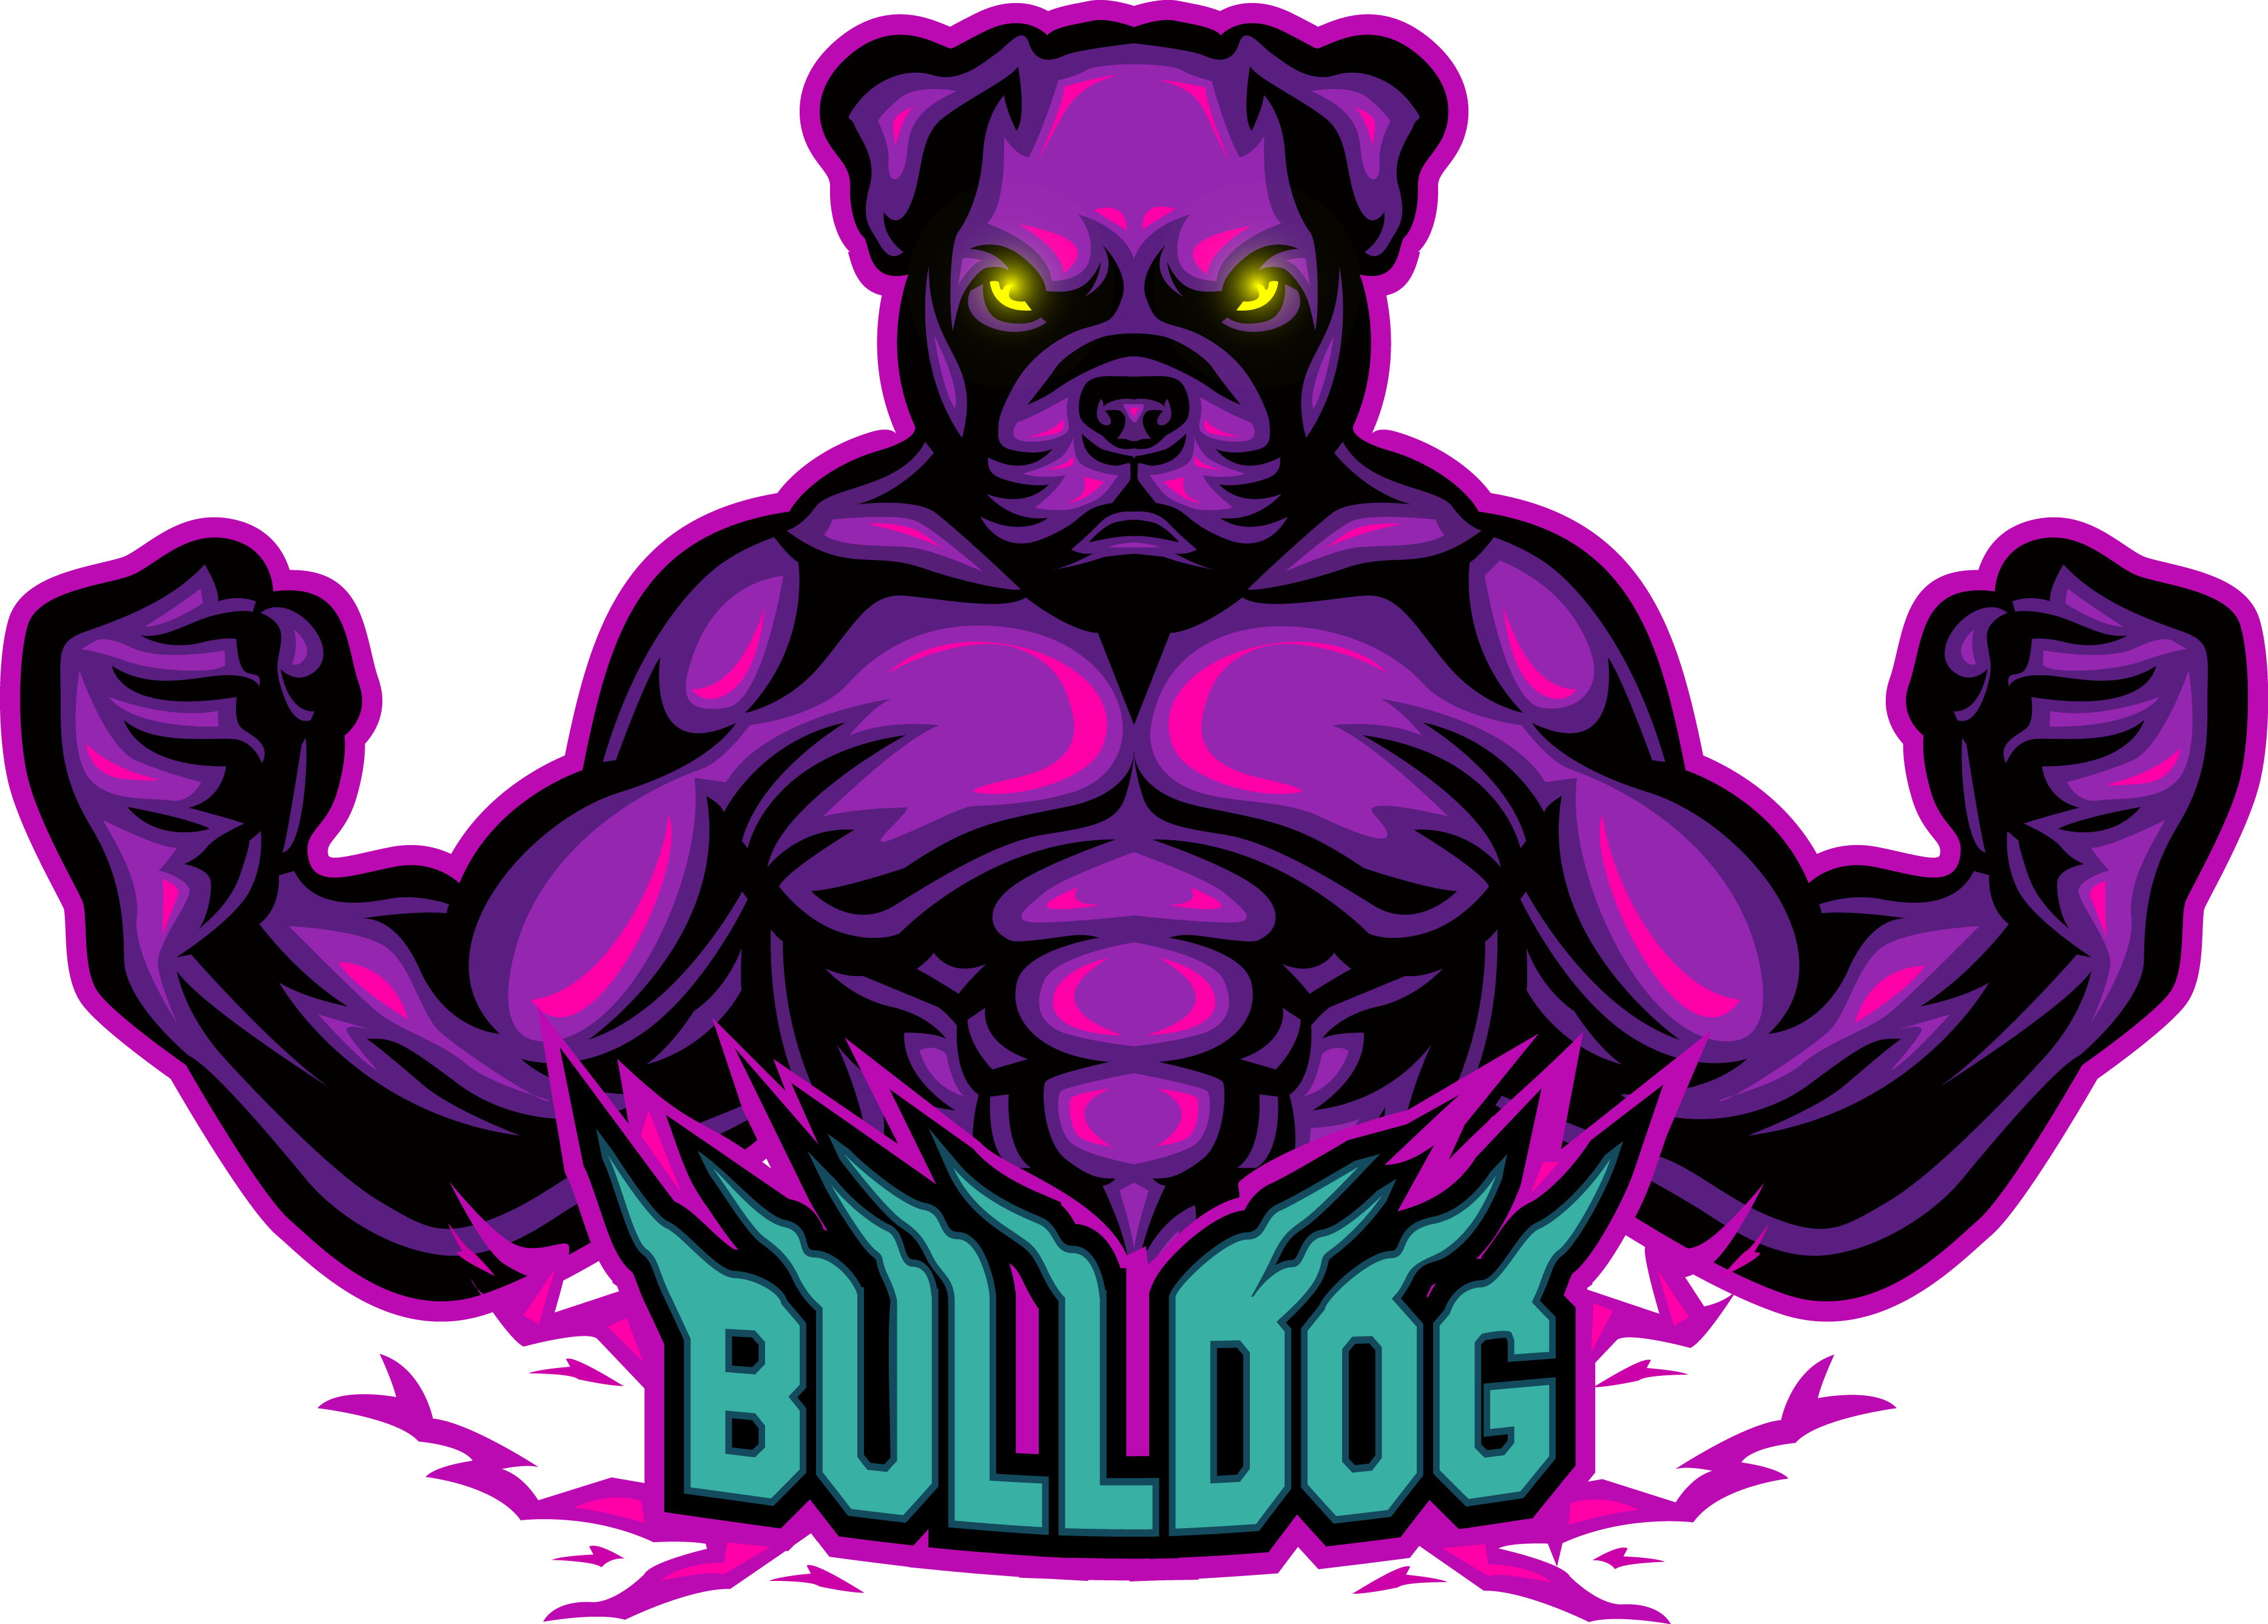 Bulldog sport mascot logo design By Visink | TheHungryJPEG.com